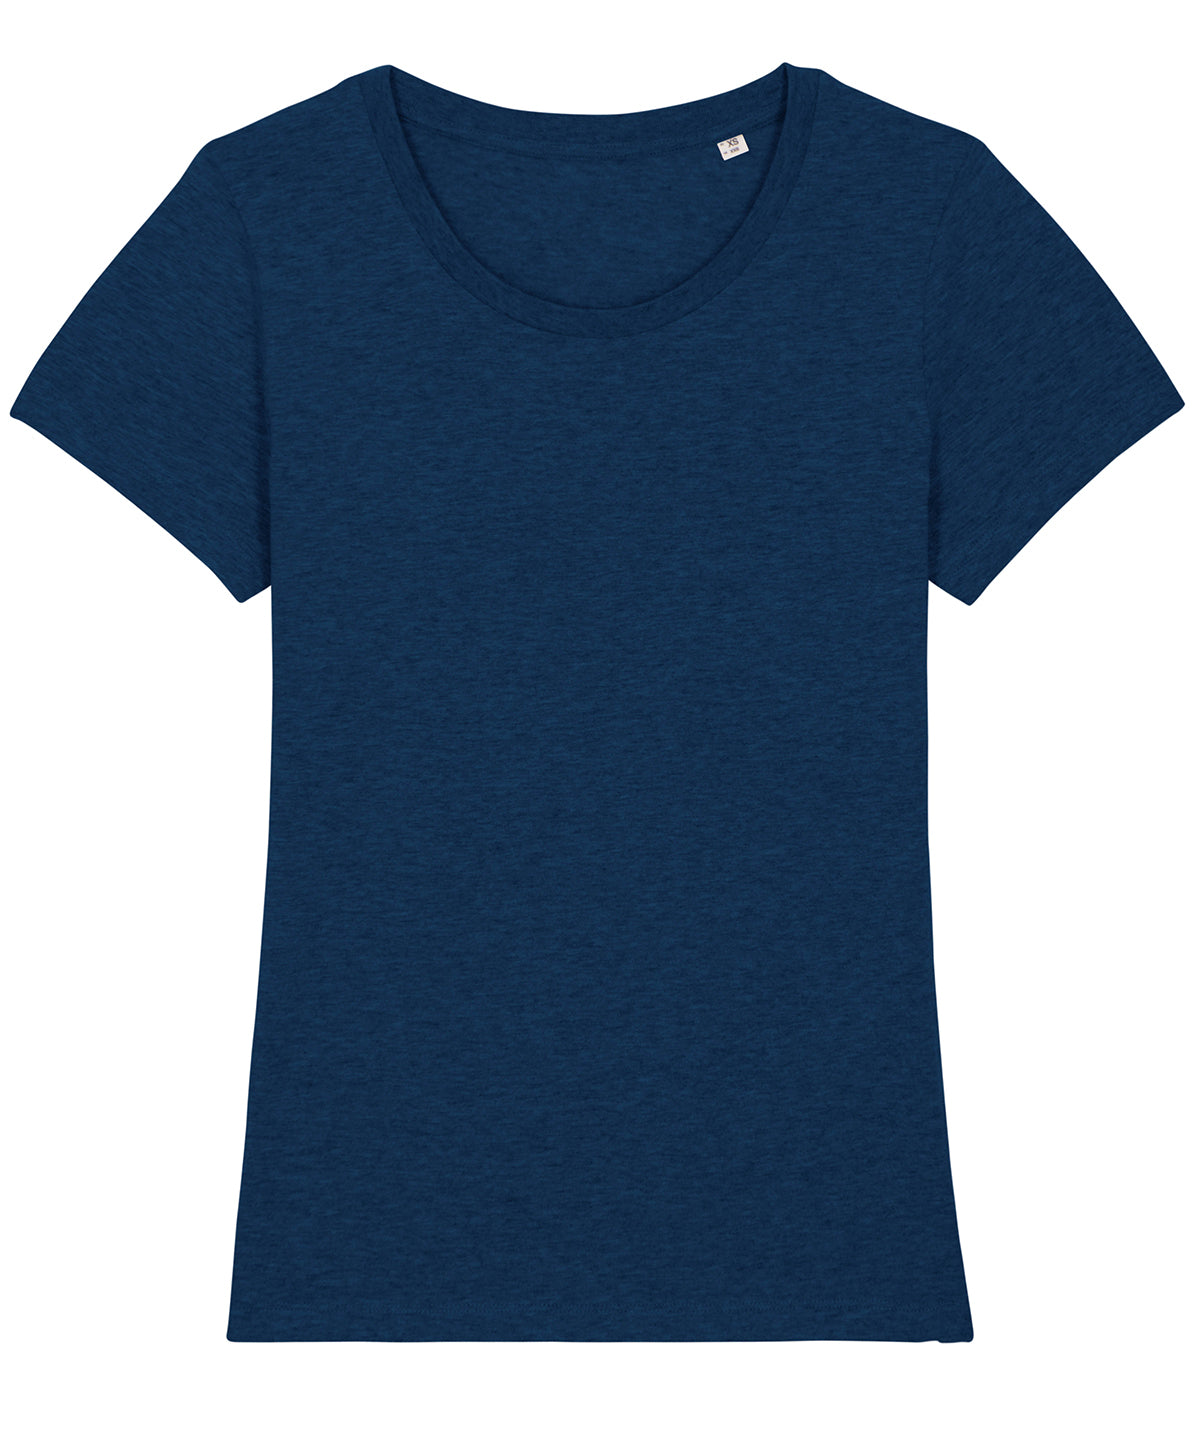 Stanley/Stella Womens Stella Expresser Iconic Fitted T-Shirt  Black Heather Blue